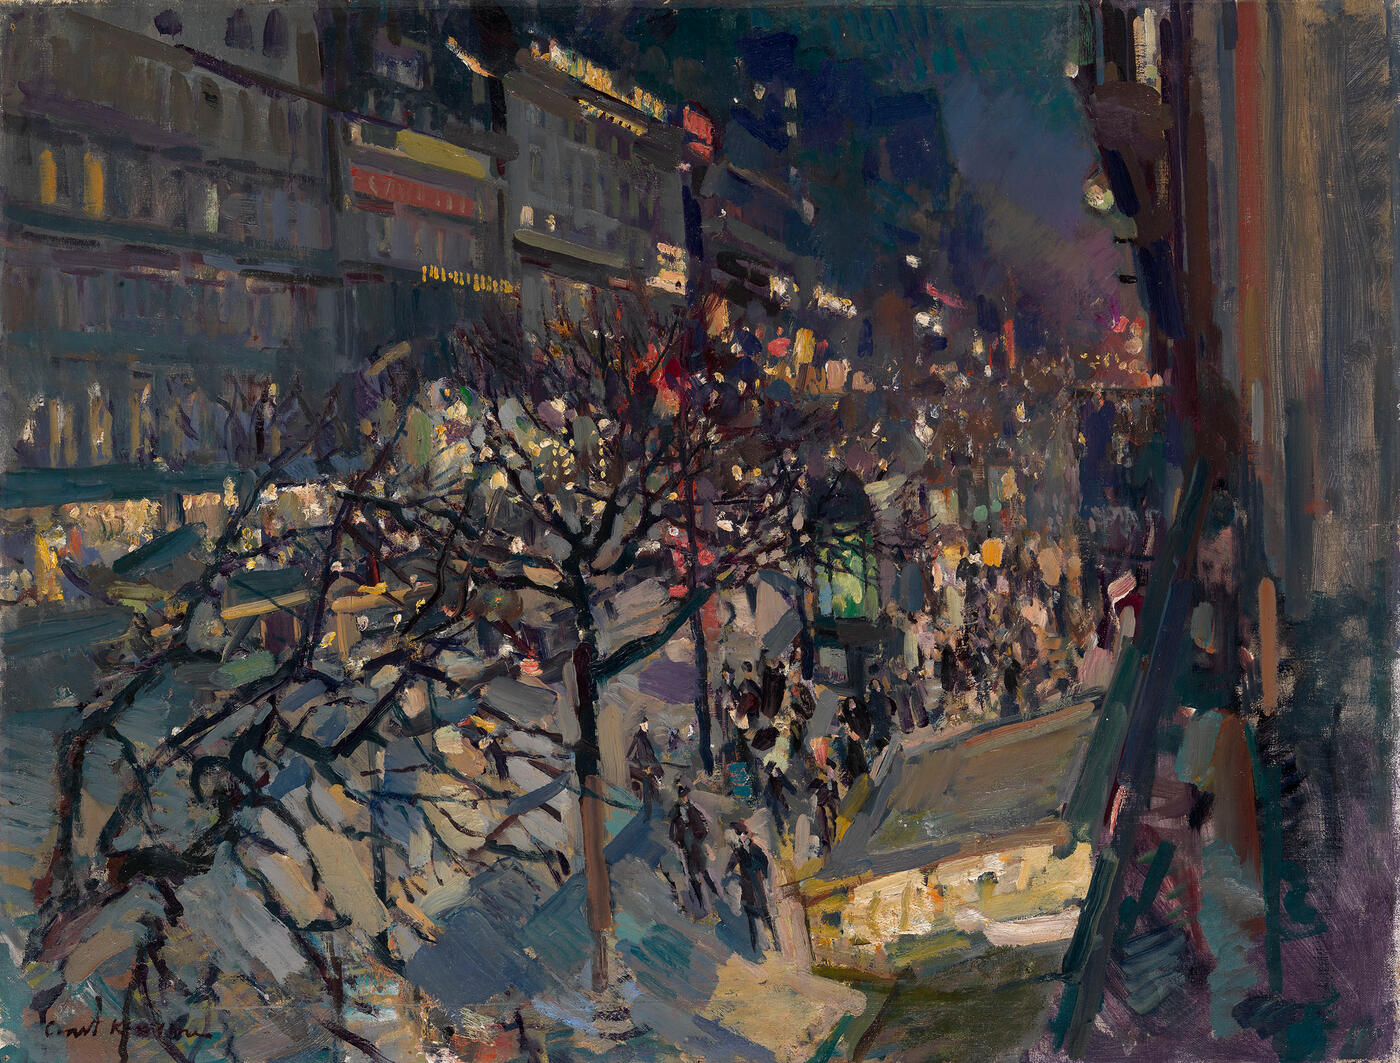 Boulevard Montmartre by Night,